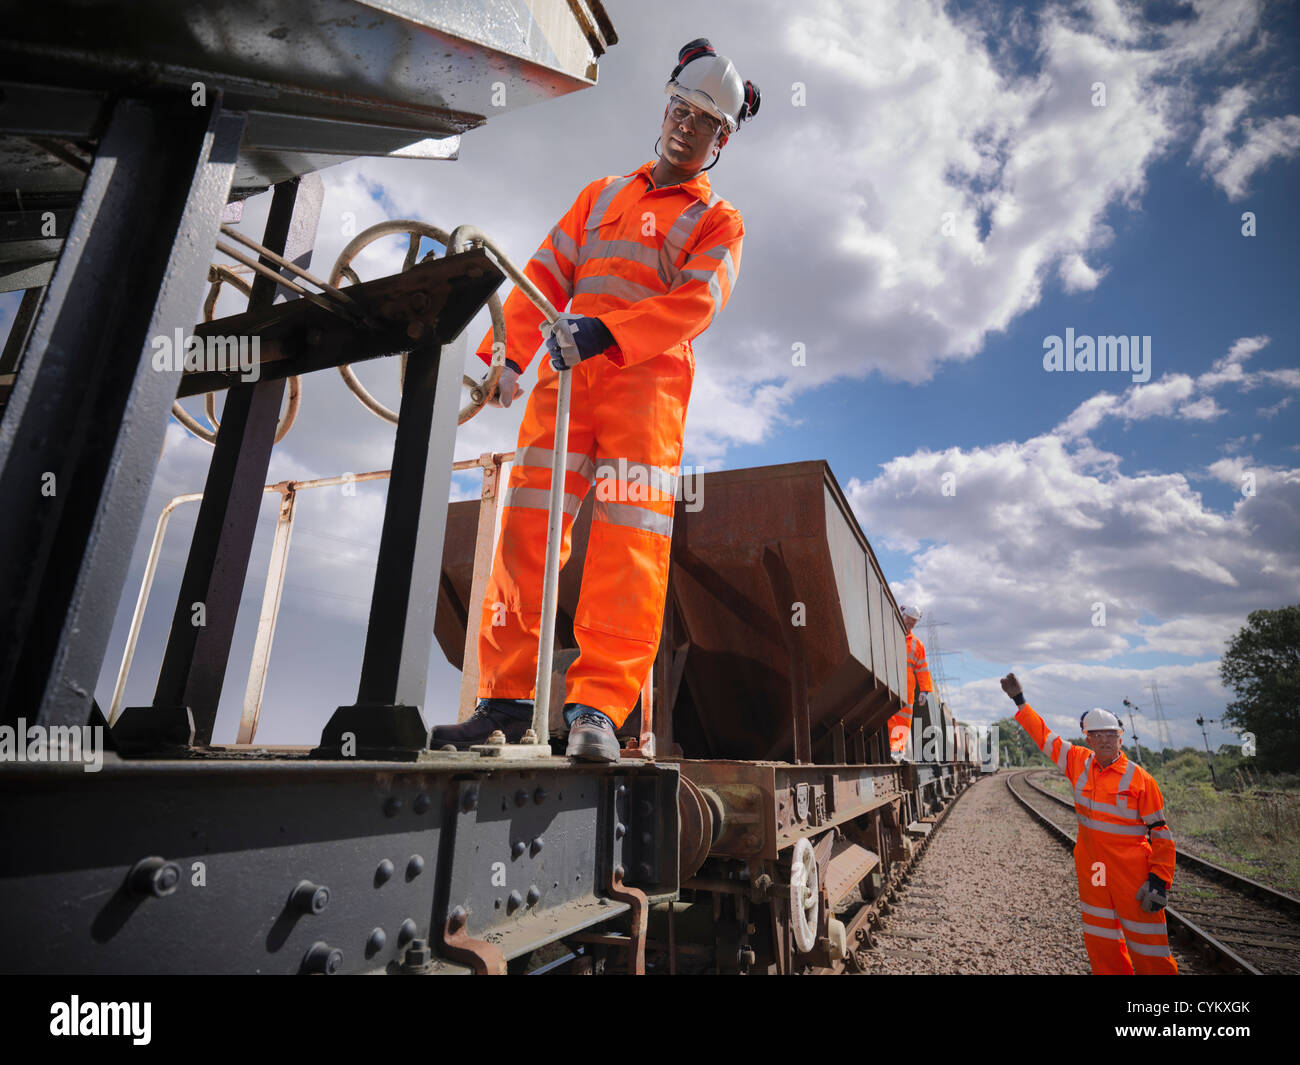 Eisenbahner stehend auf Zug Stockfotografie - Alamy